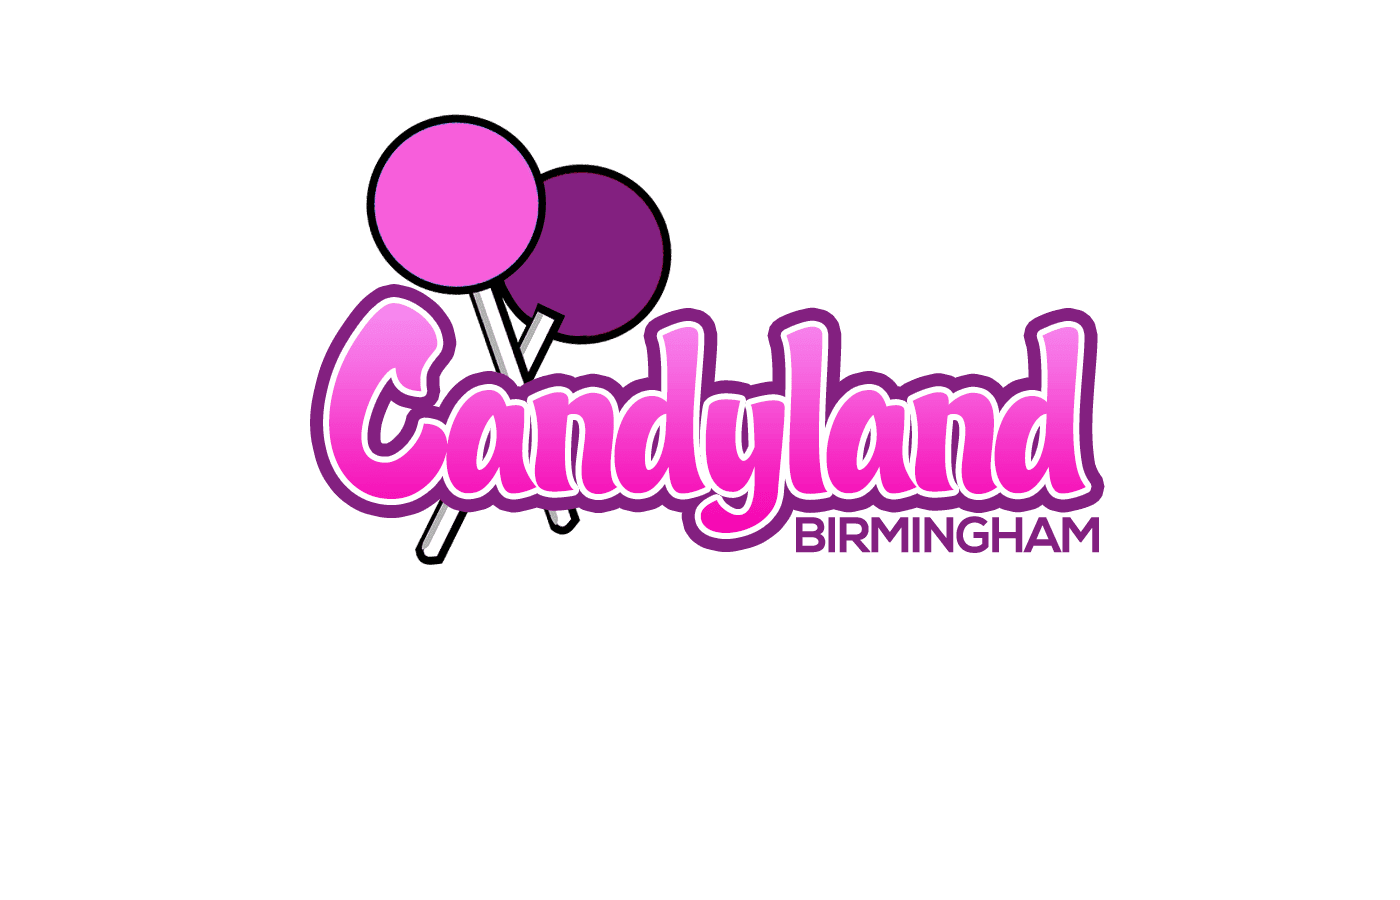 Candyland Birmingham